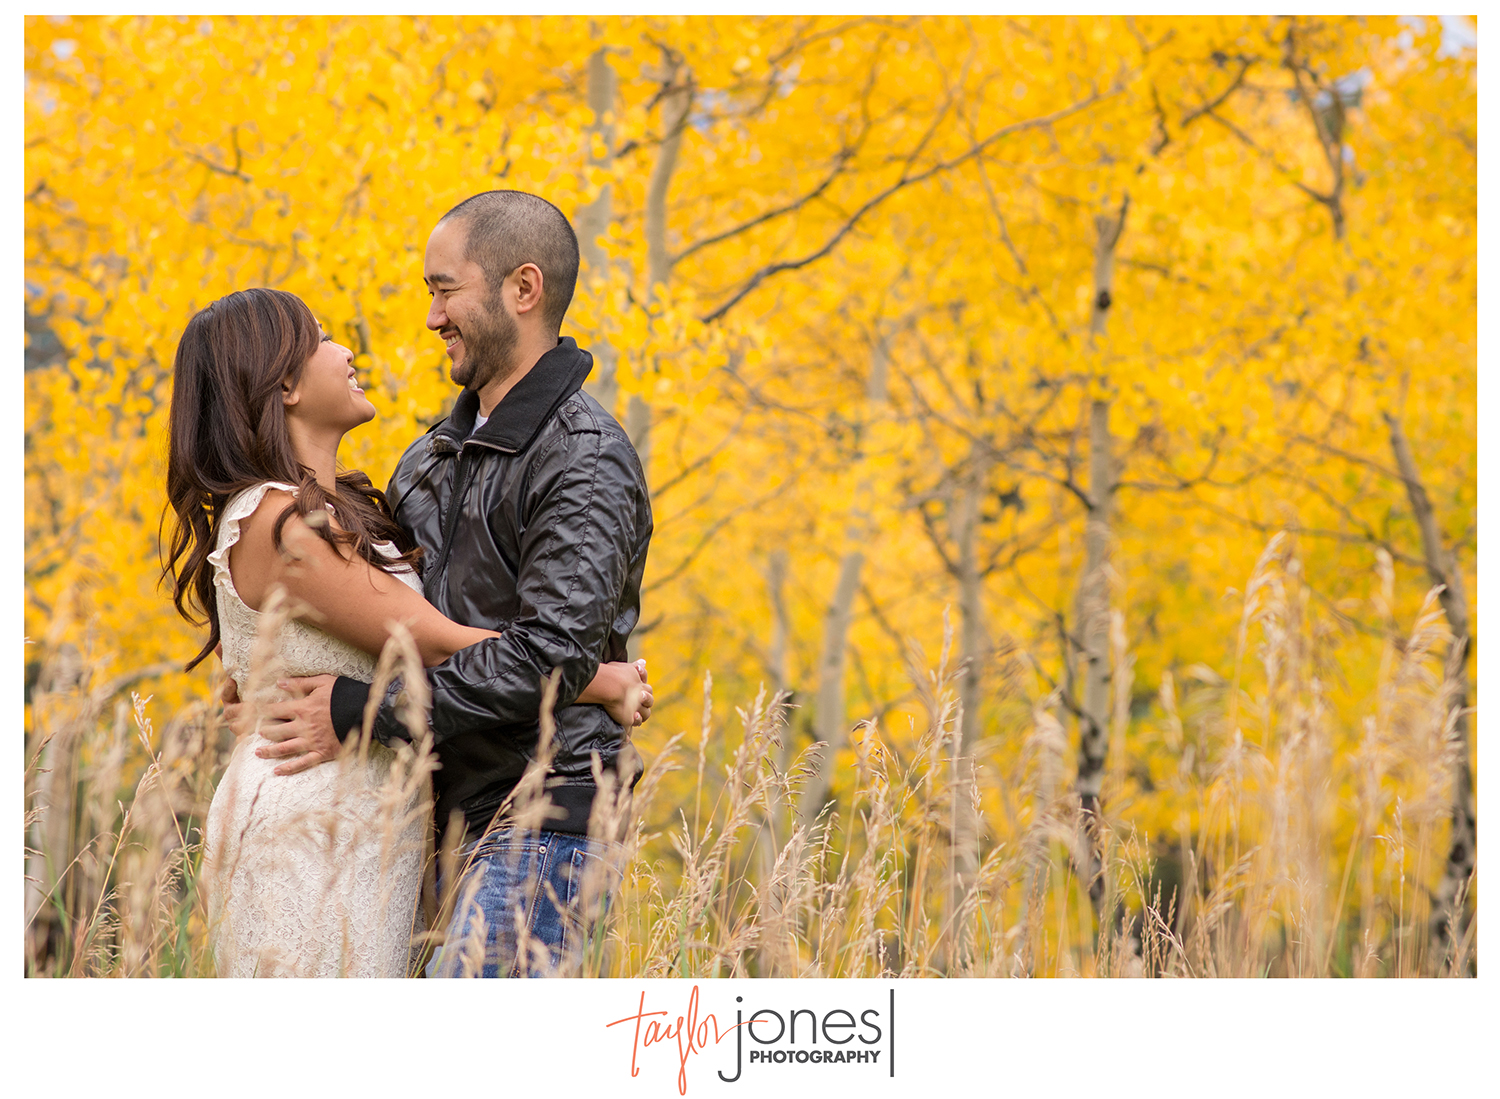 Couple in fall aspen leaves engagement shoot in Golden Gate Park